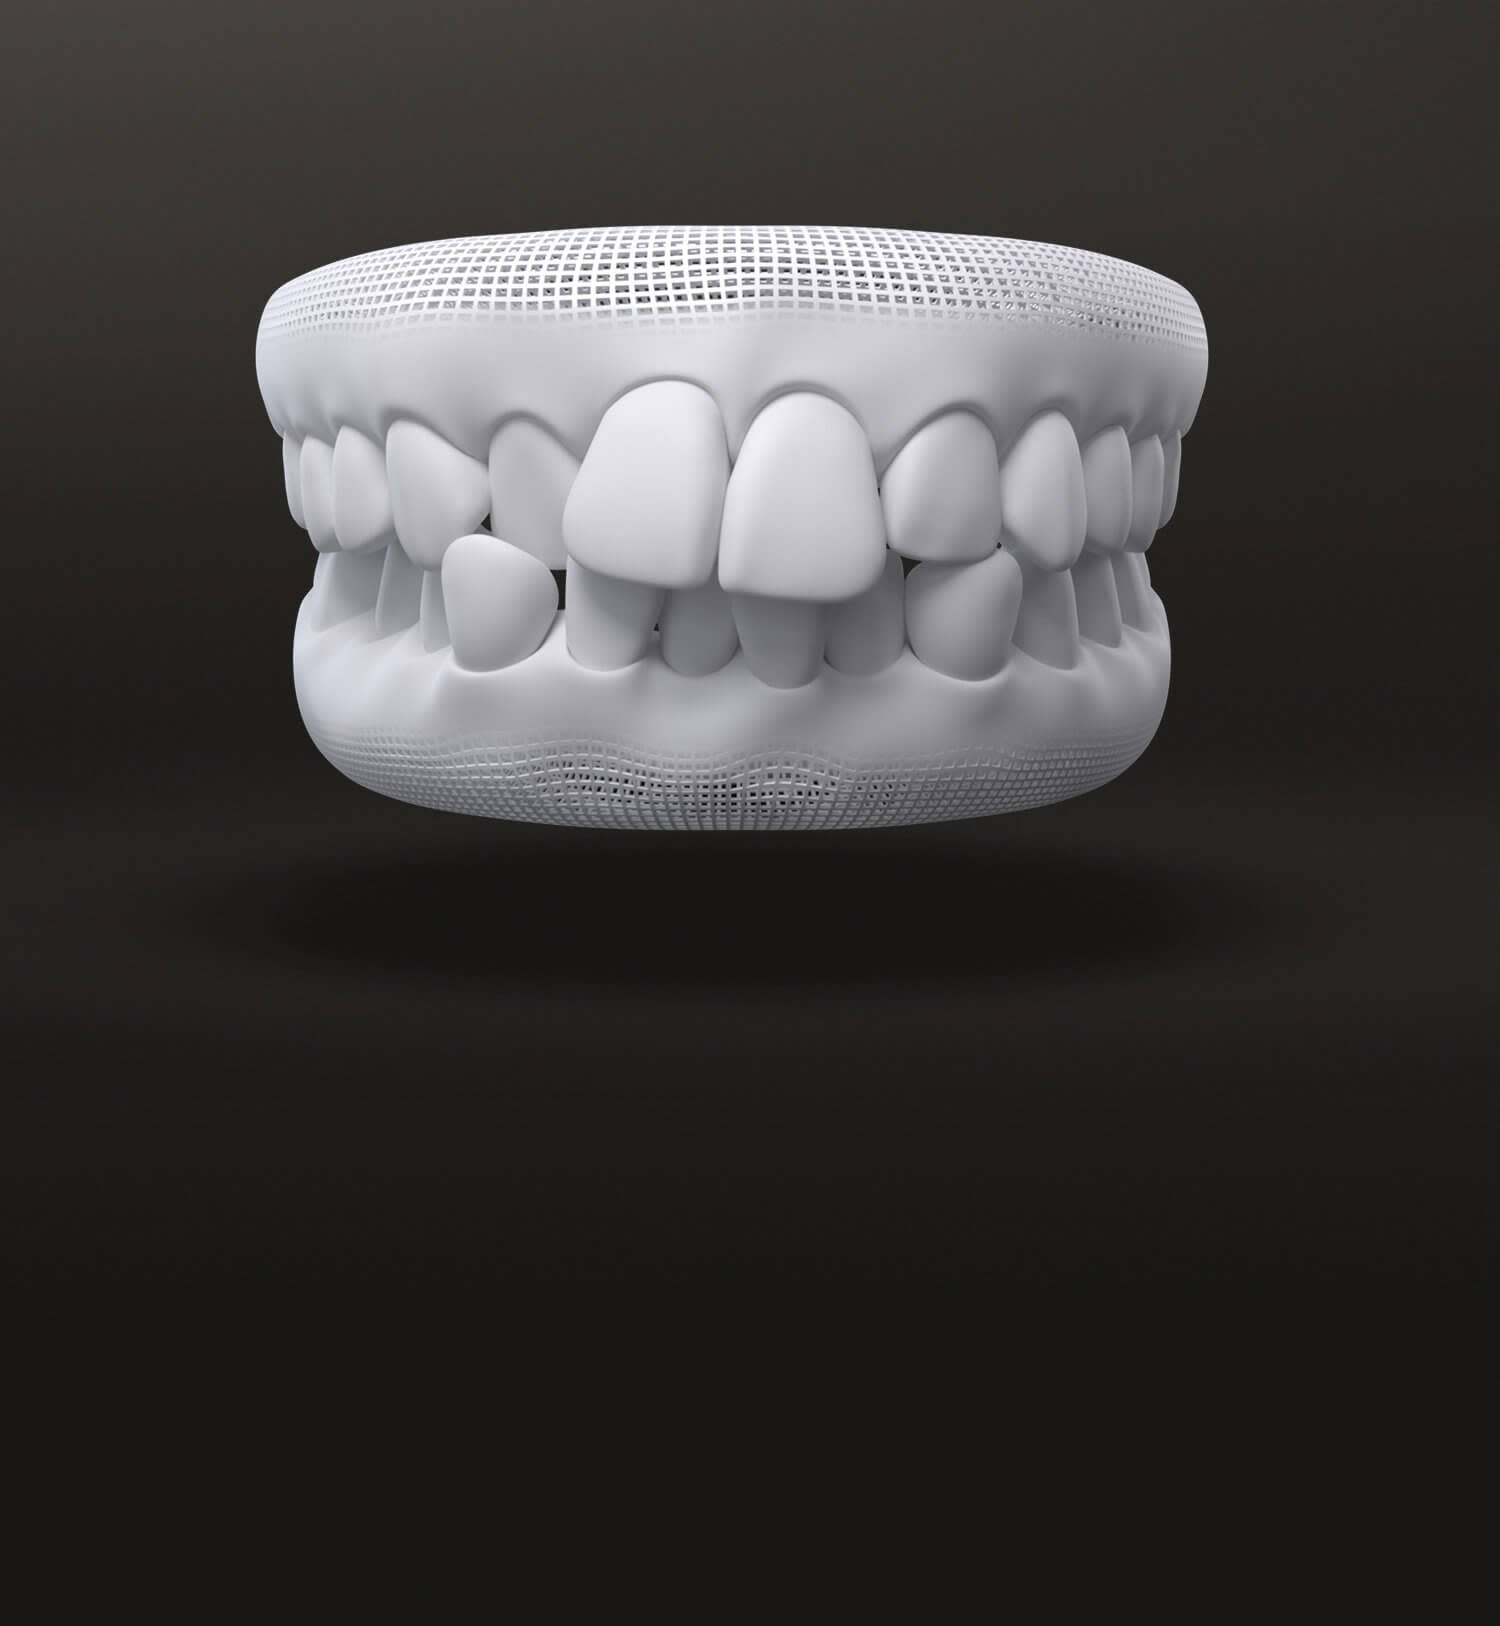 Crowded teeth model 3d - Invisalign treatments UK